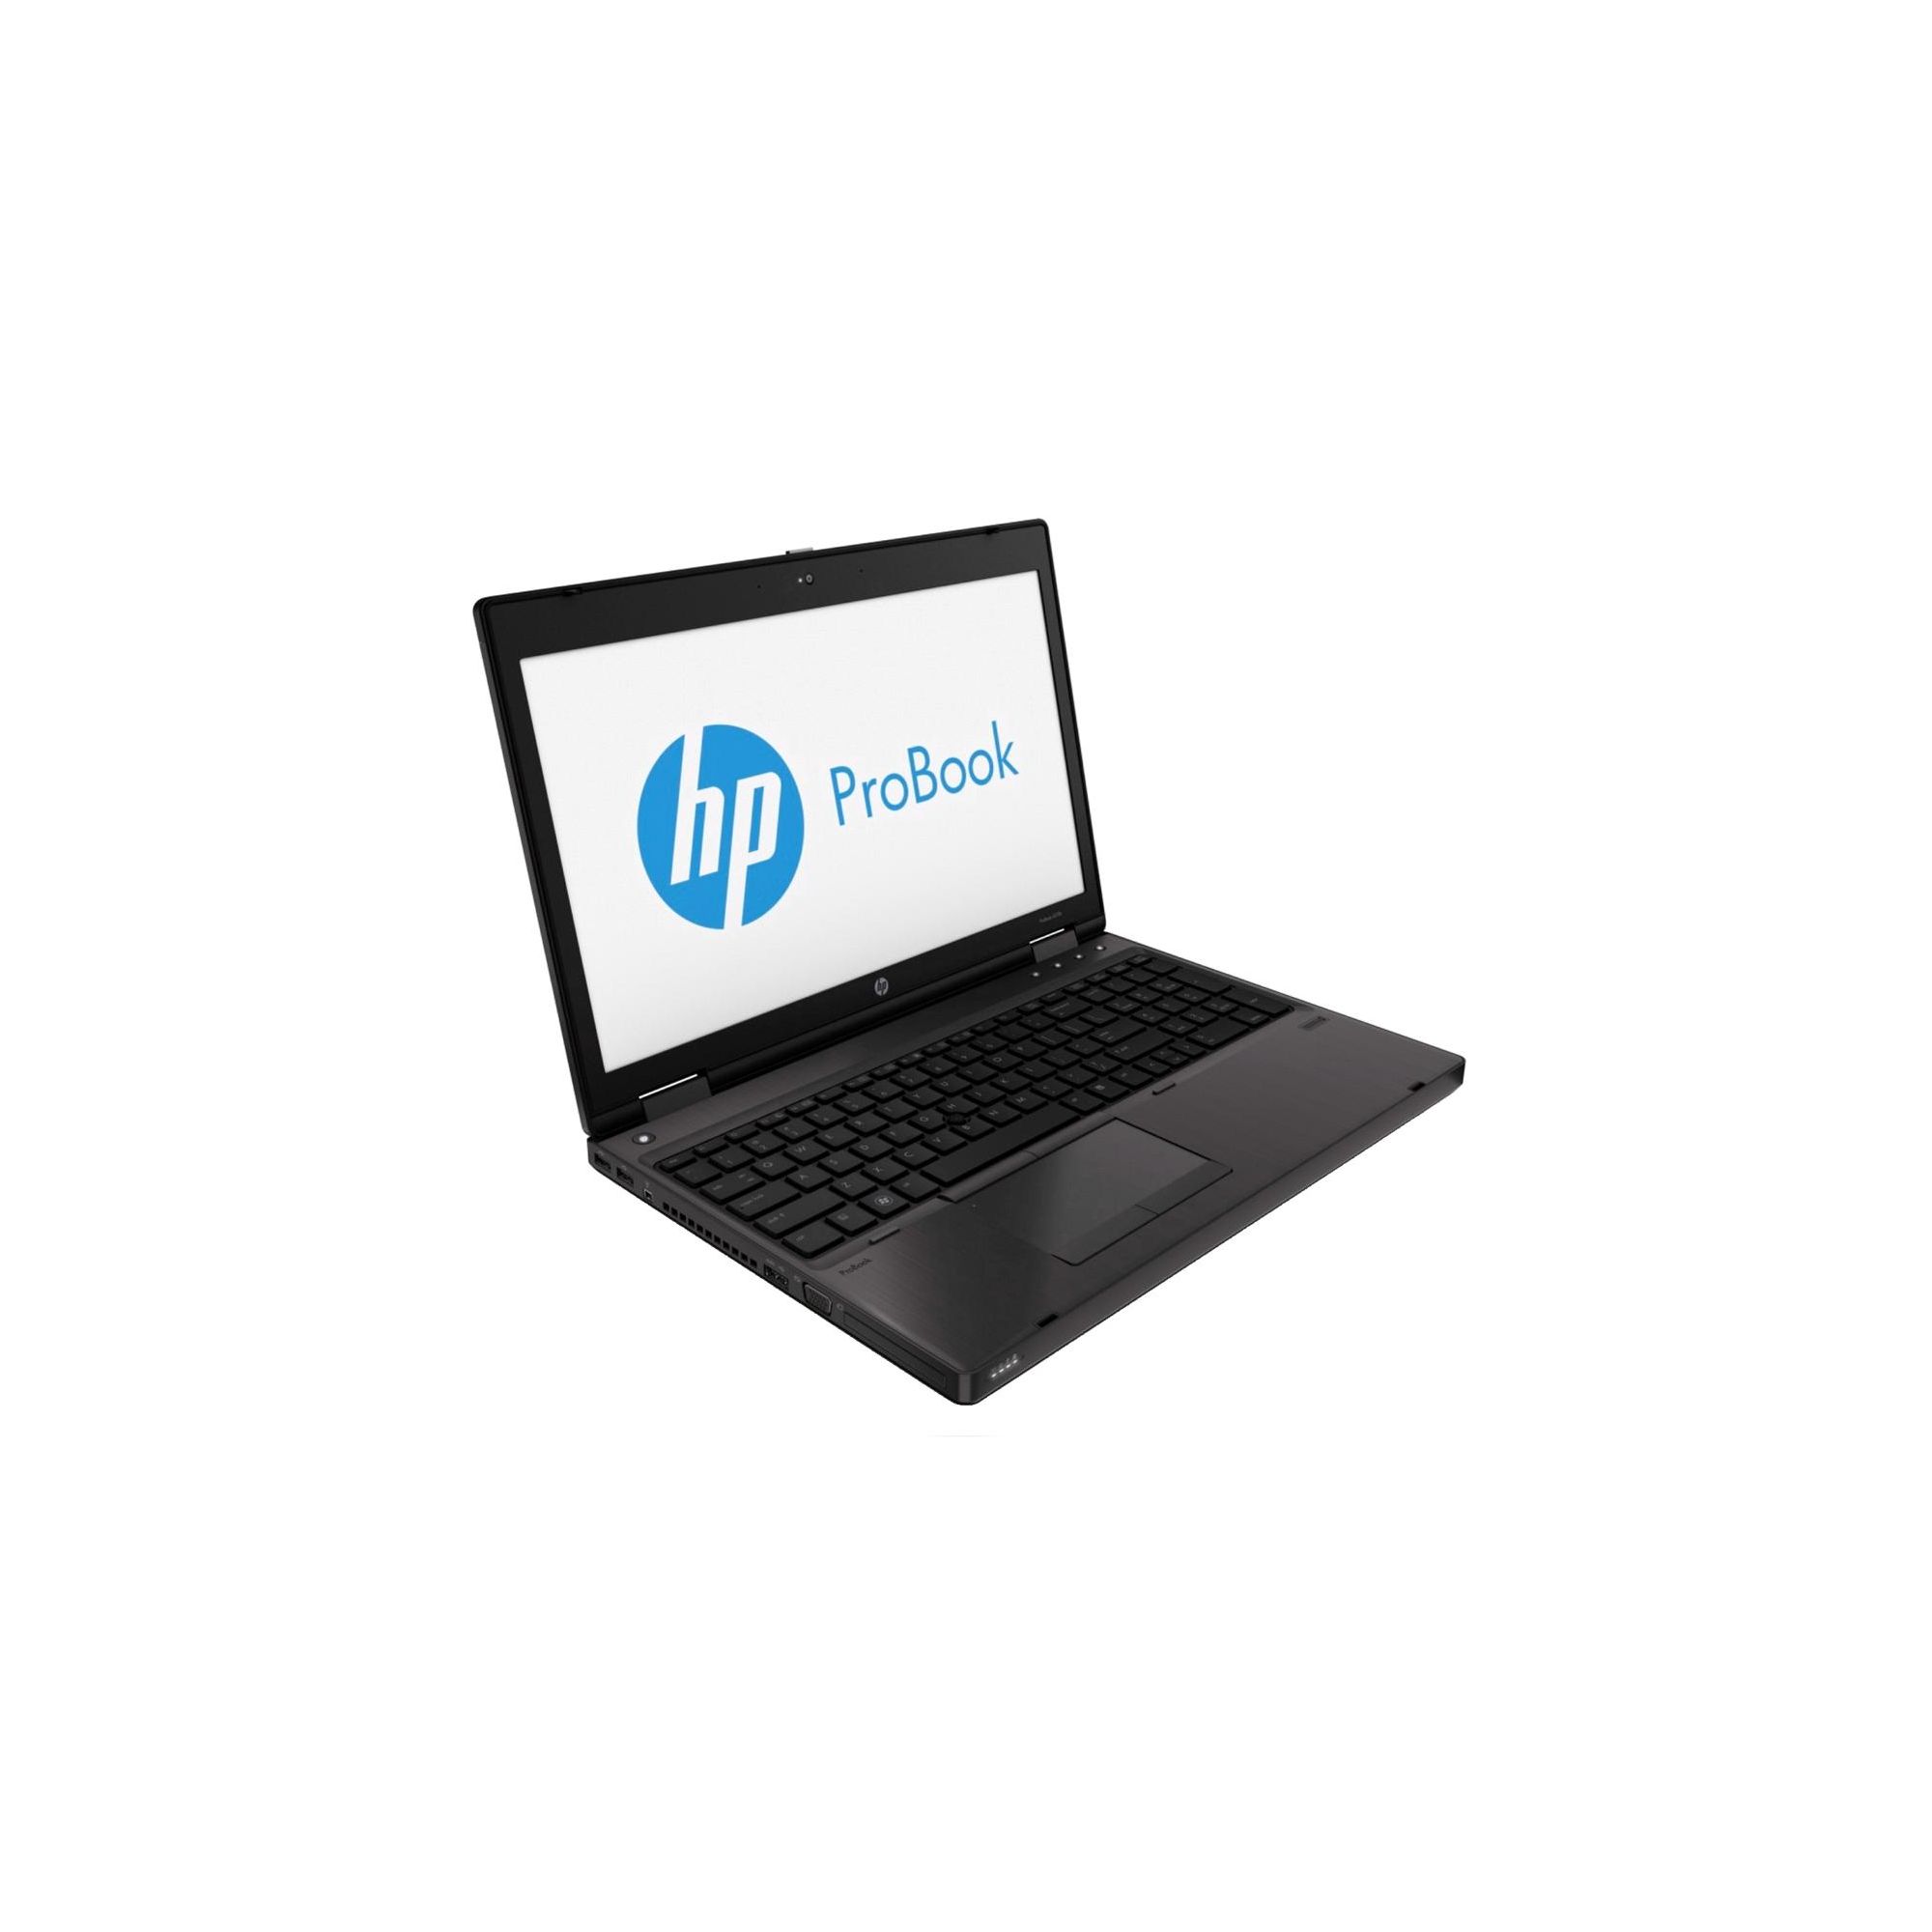 HP ProBook 6570b (15. 6 inch) Notebook Core i3 (3110M) 2. at Tesco Direct